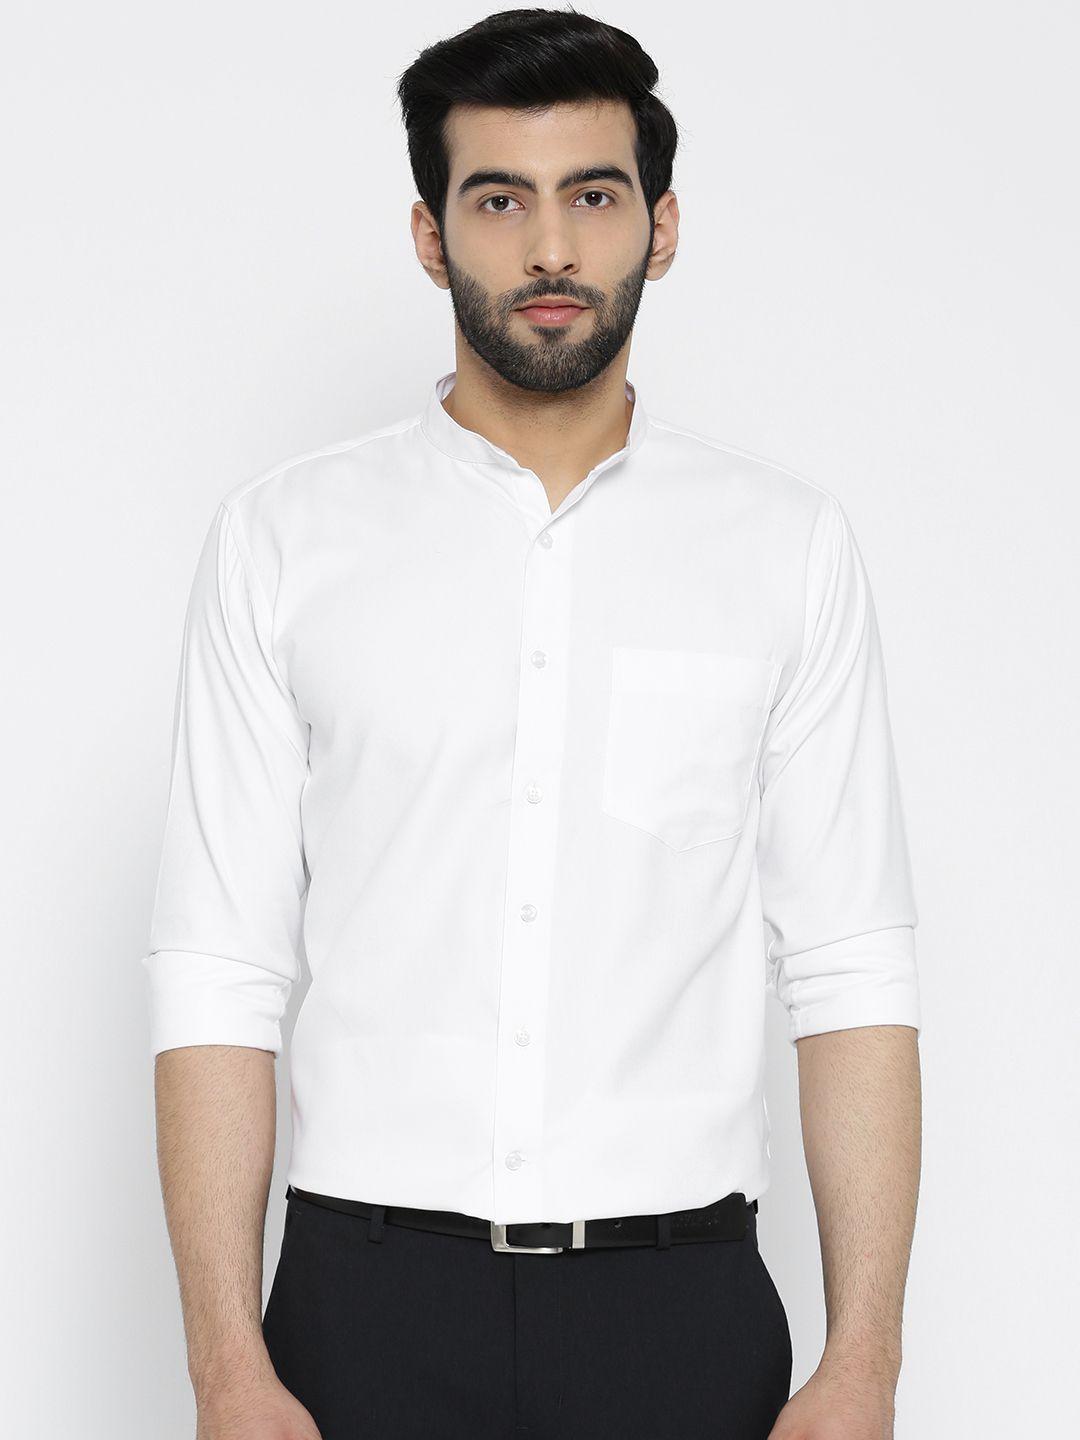 shaftesbury-london-men-white-smart-slim-fit-solid-semiformal-shirt